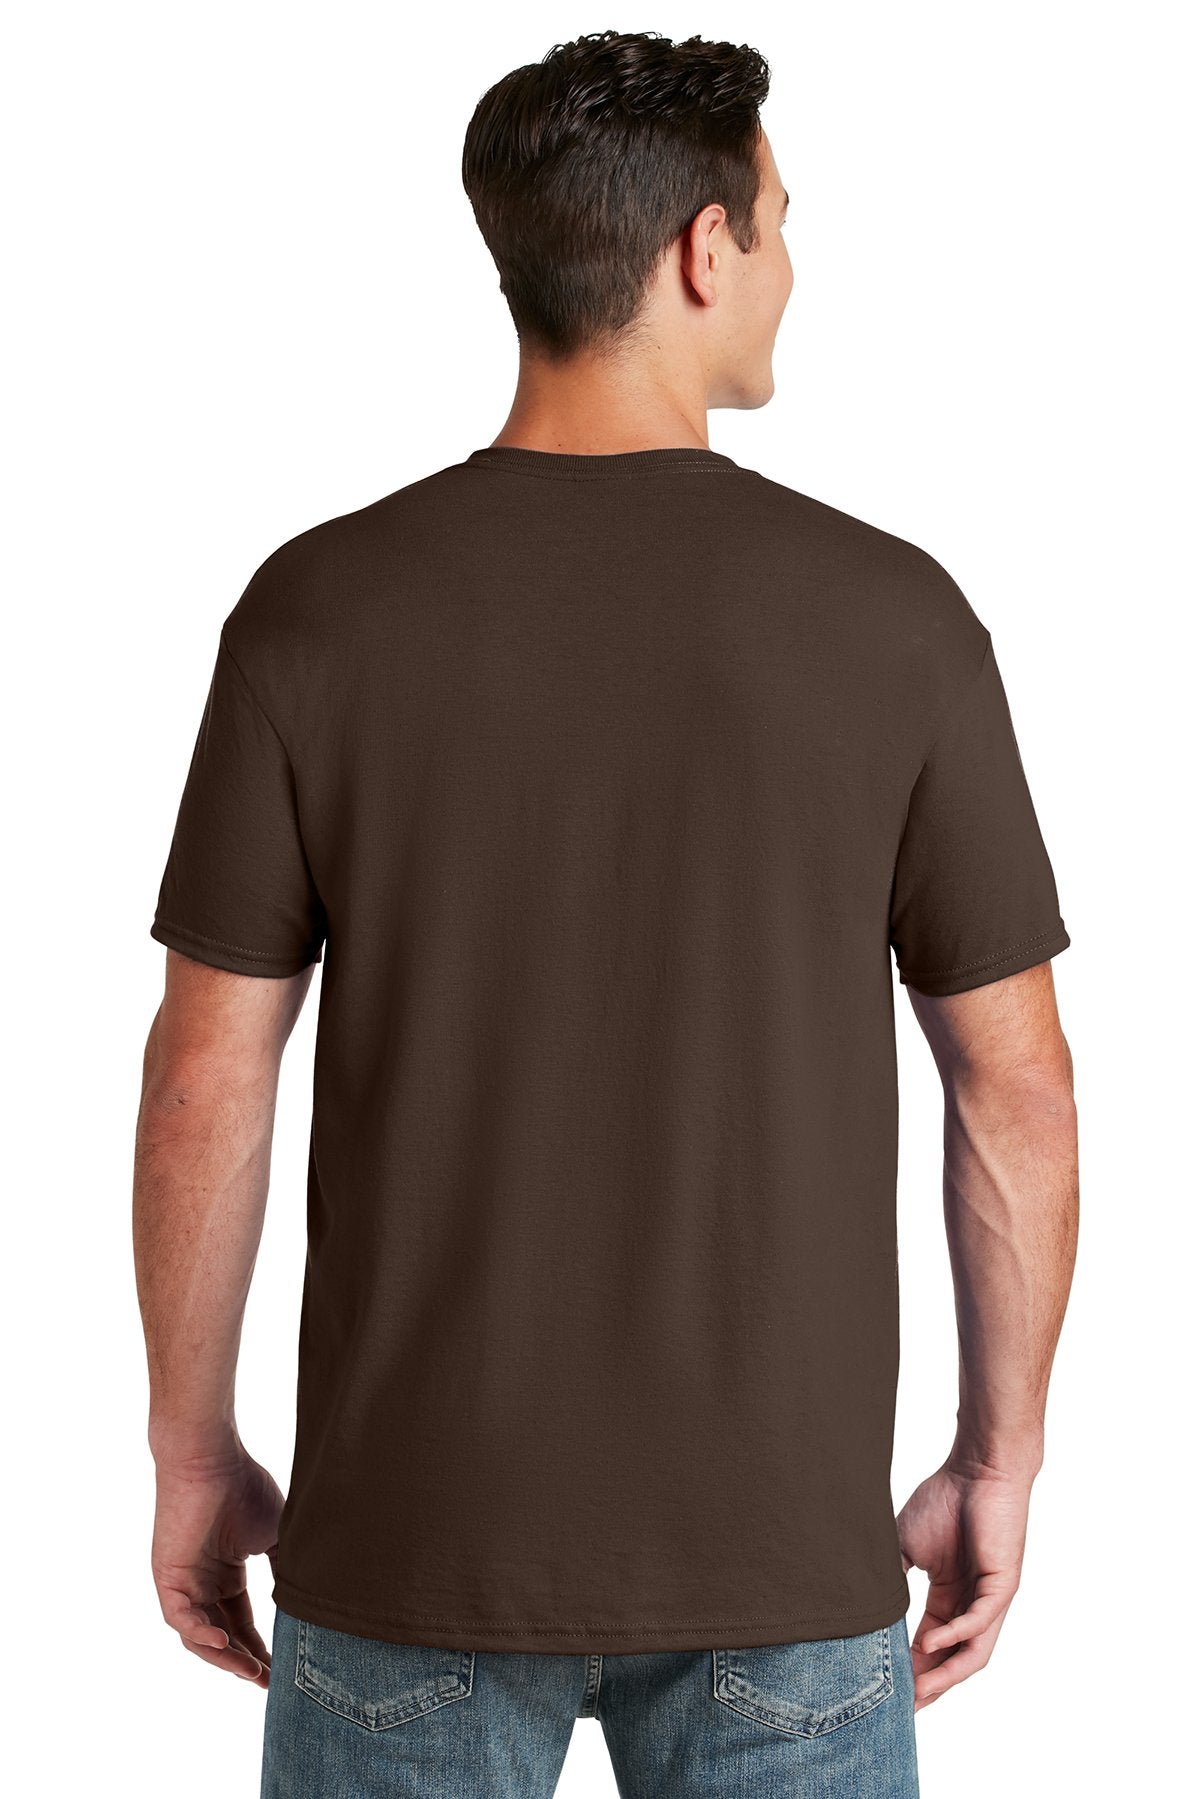 Jerzees Dri-Power Active 50/50 Cotton/Poly T-Shirt 29M Chocolate